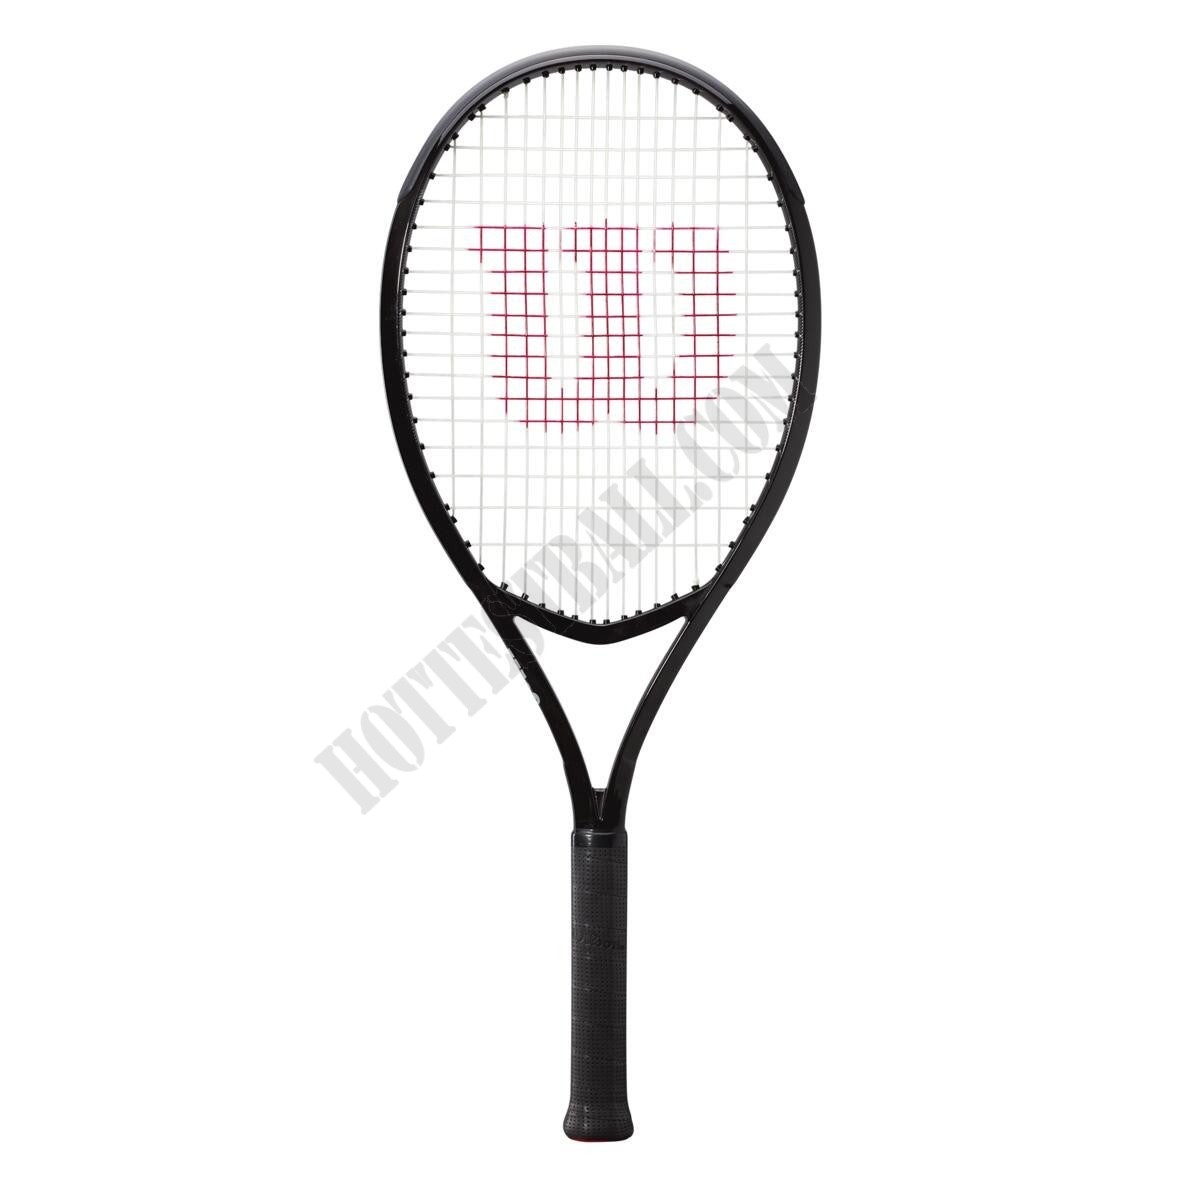 XP 1 Tennis Racket - Wilson Discount Store - XP 1 Tennis Racket - Wilson Discount Store